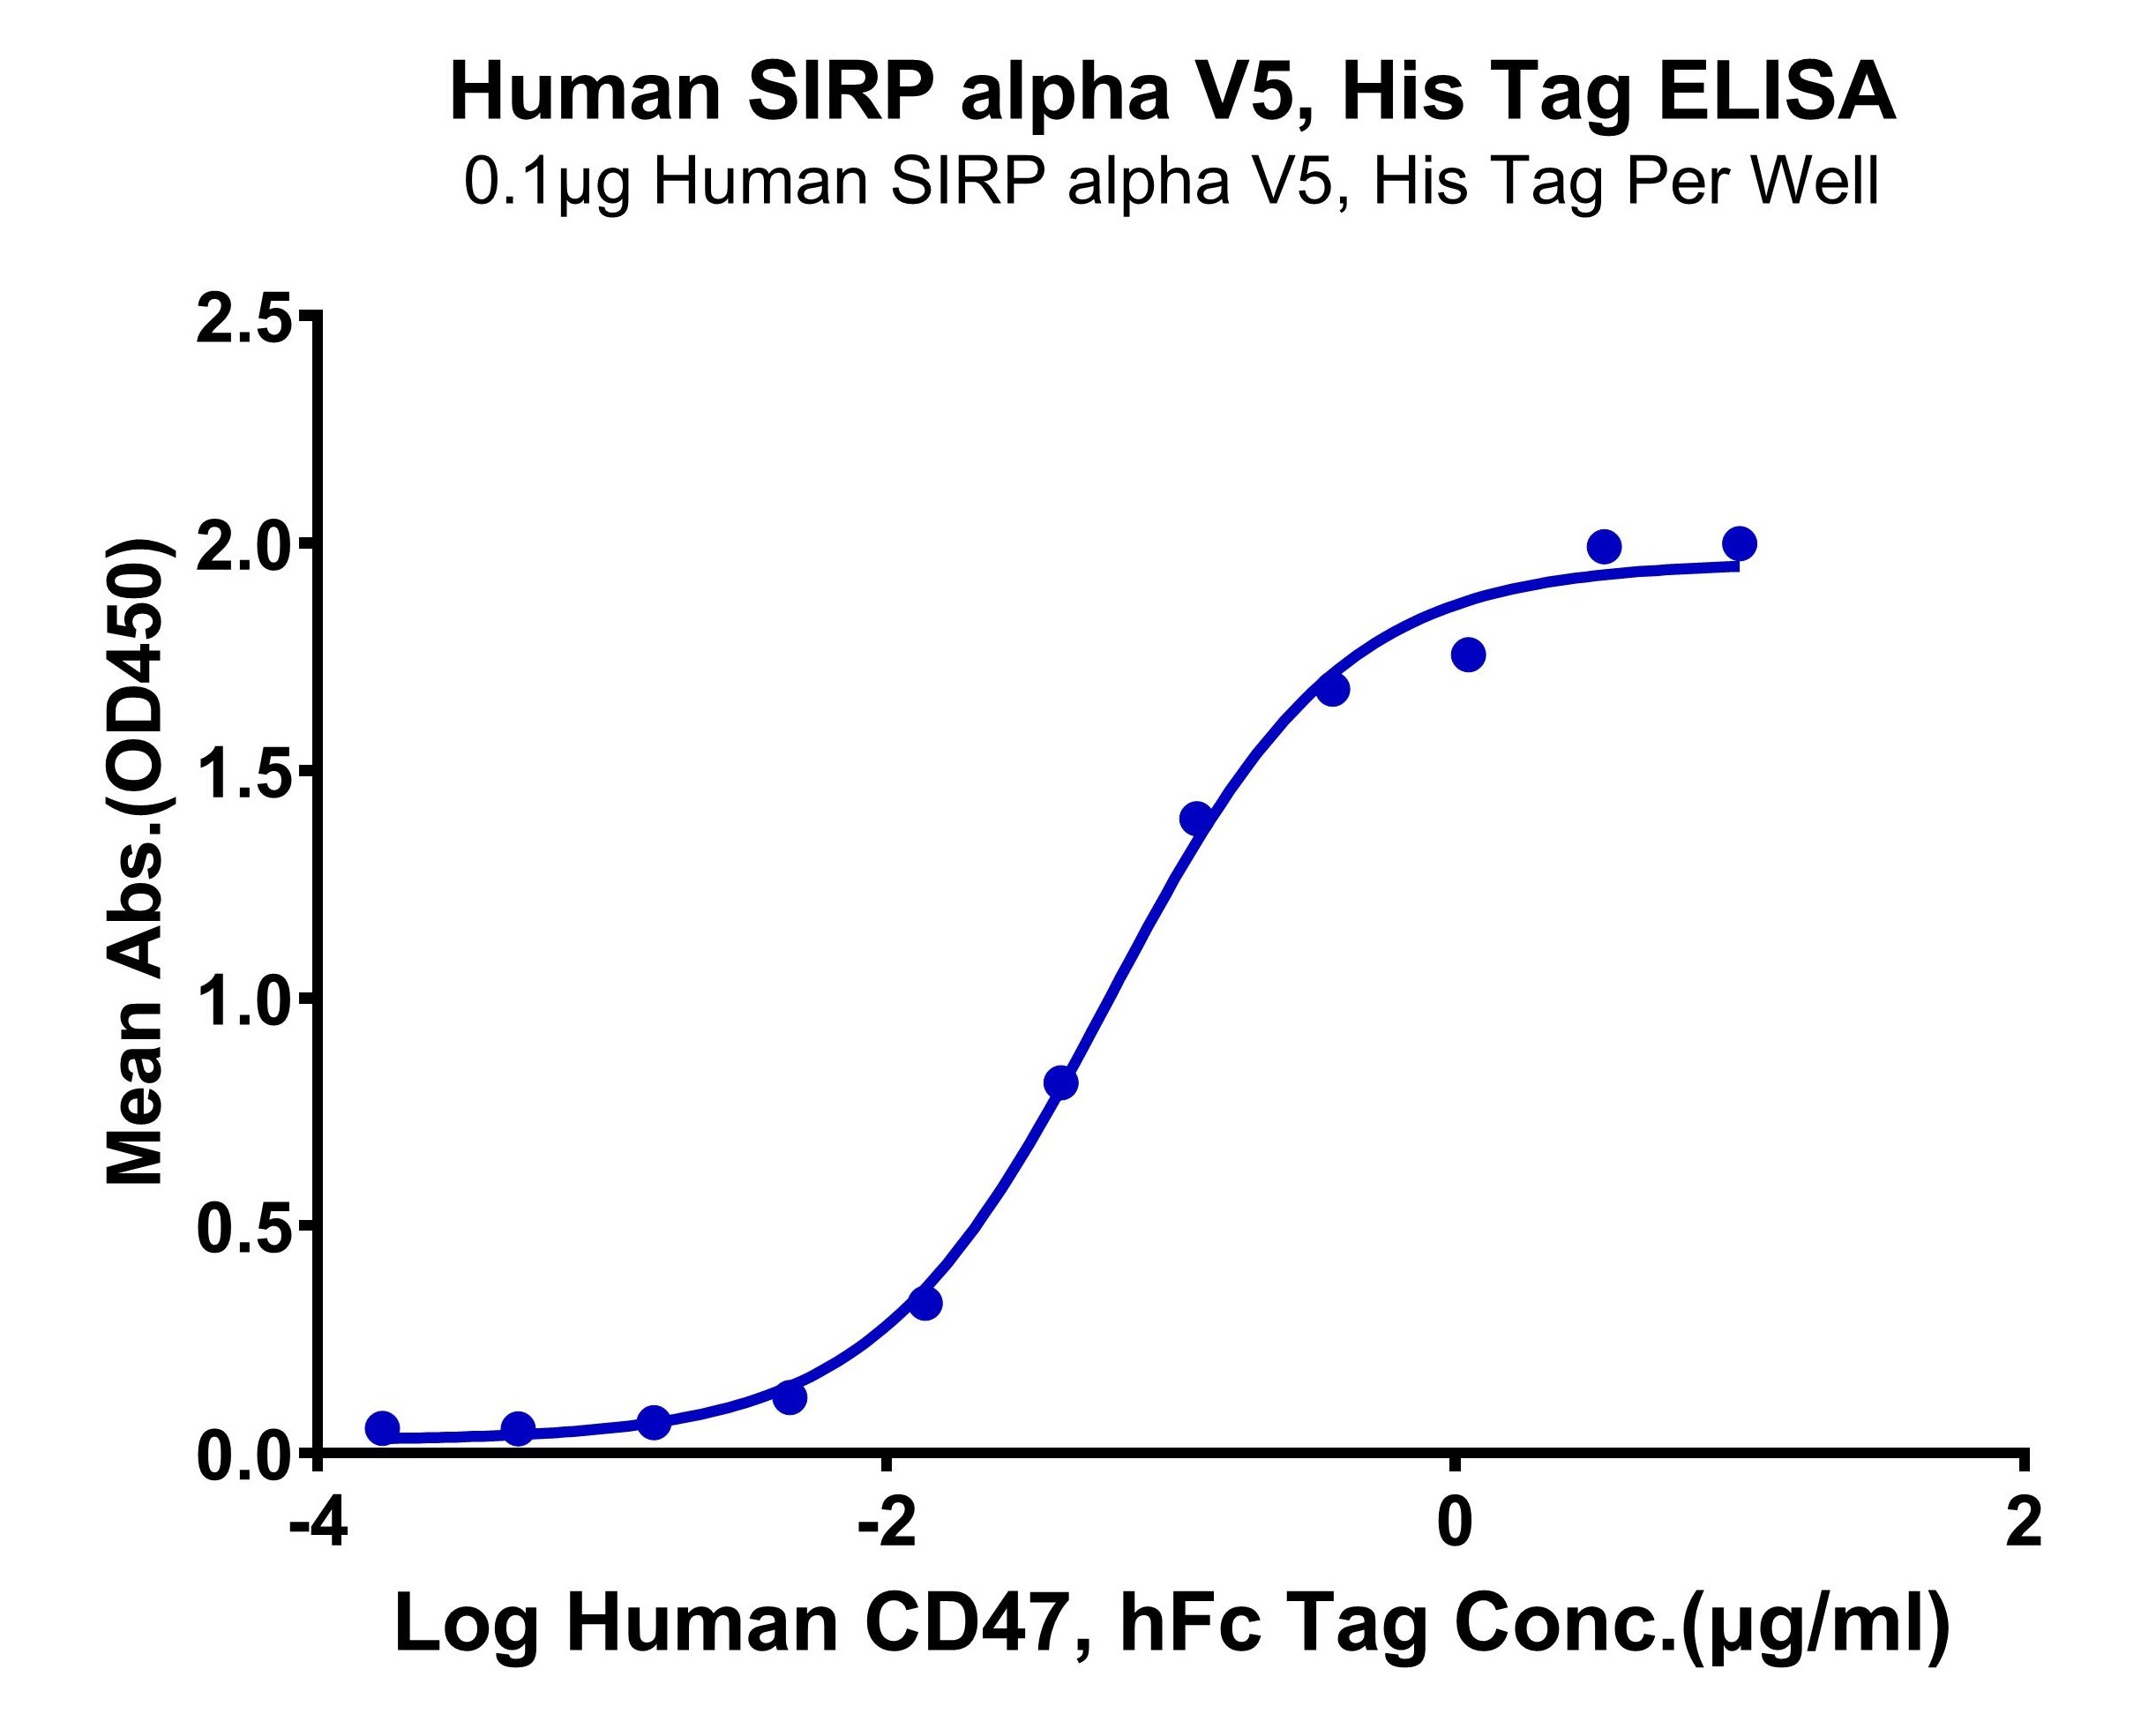 Human SIRP alpha V5 Protein (LTP11121)